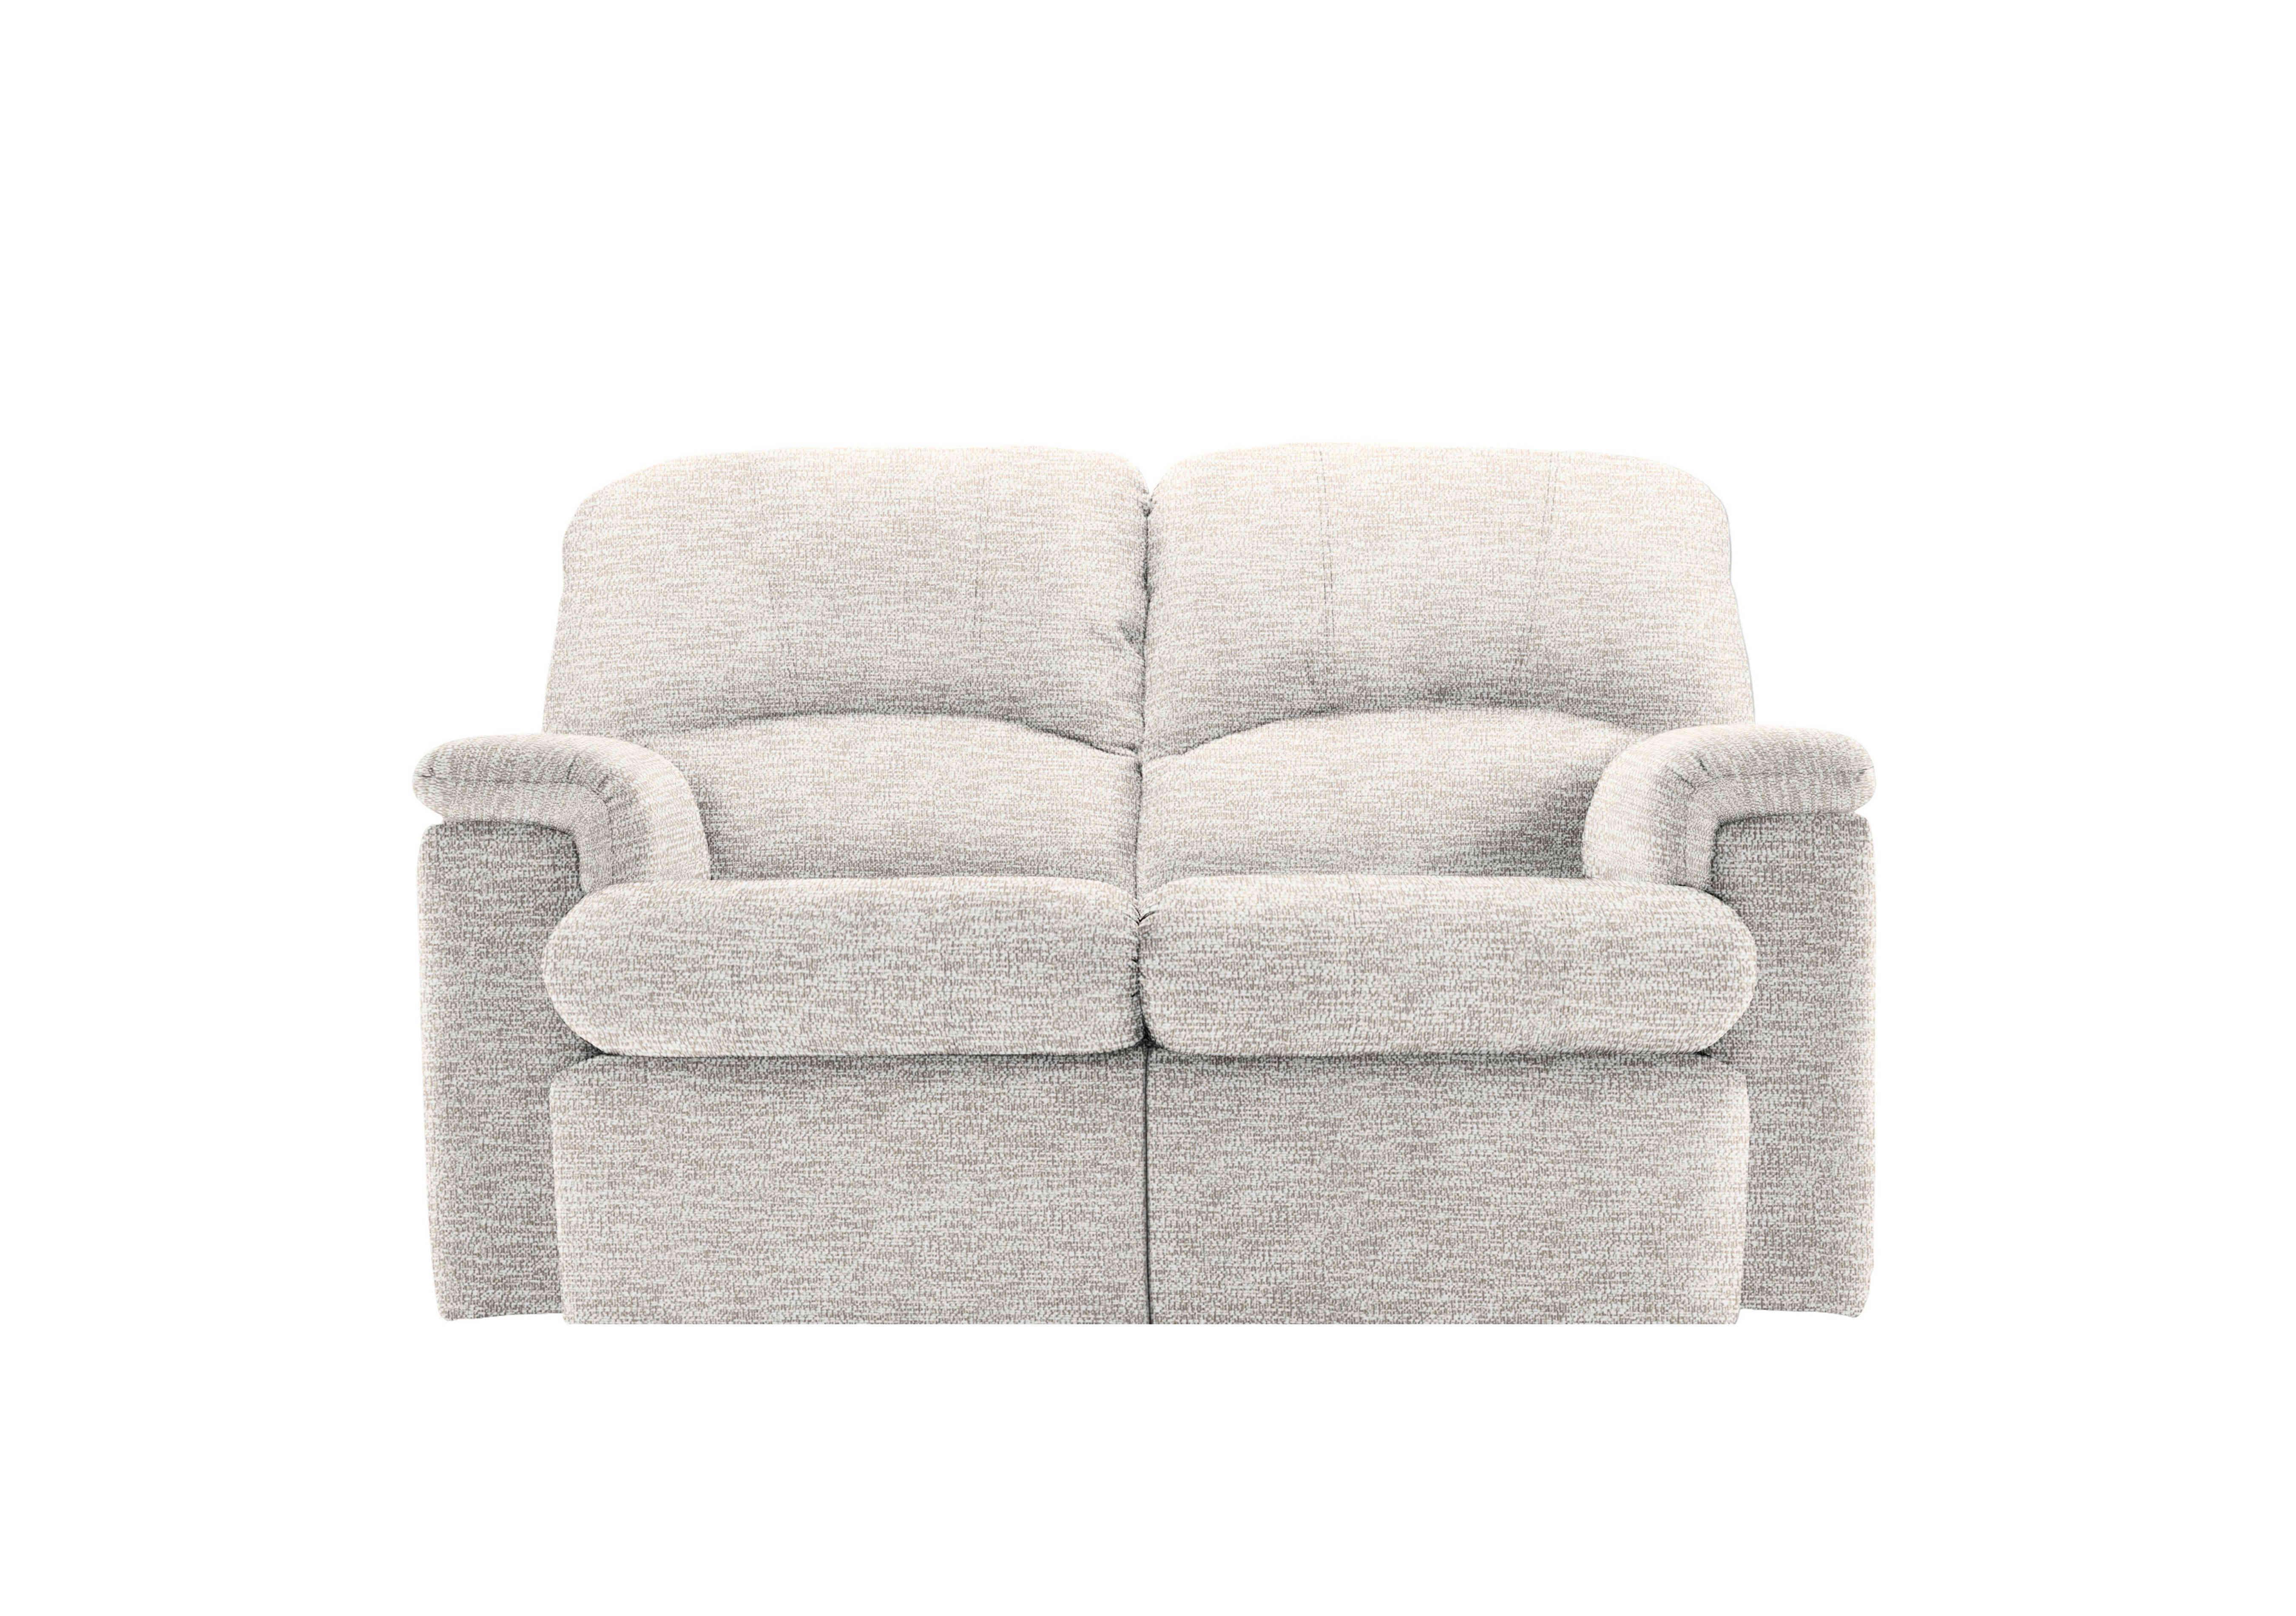 Chloe 2 Seater Fabric Sofa in C931 Rush Cream on Furniture Village